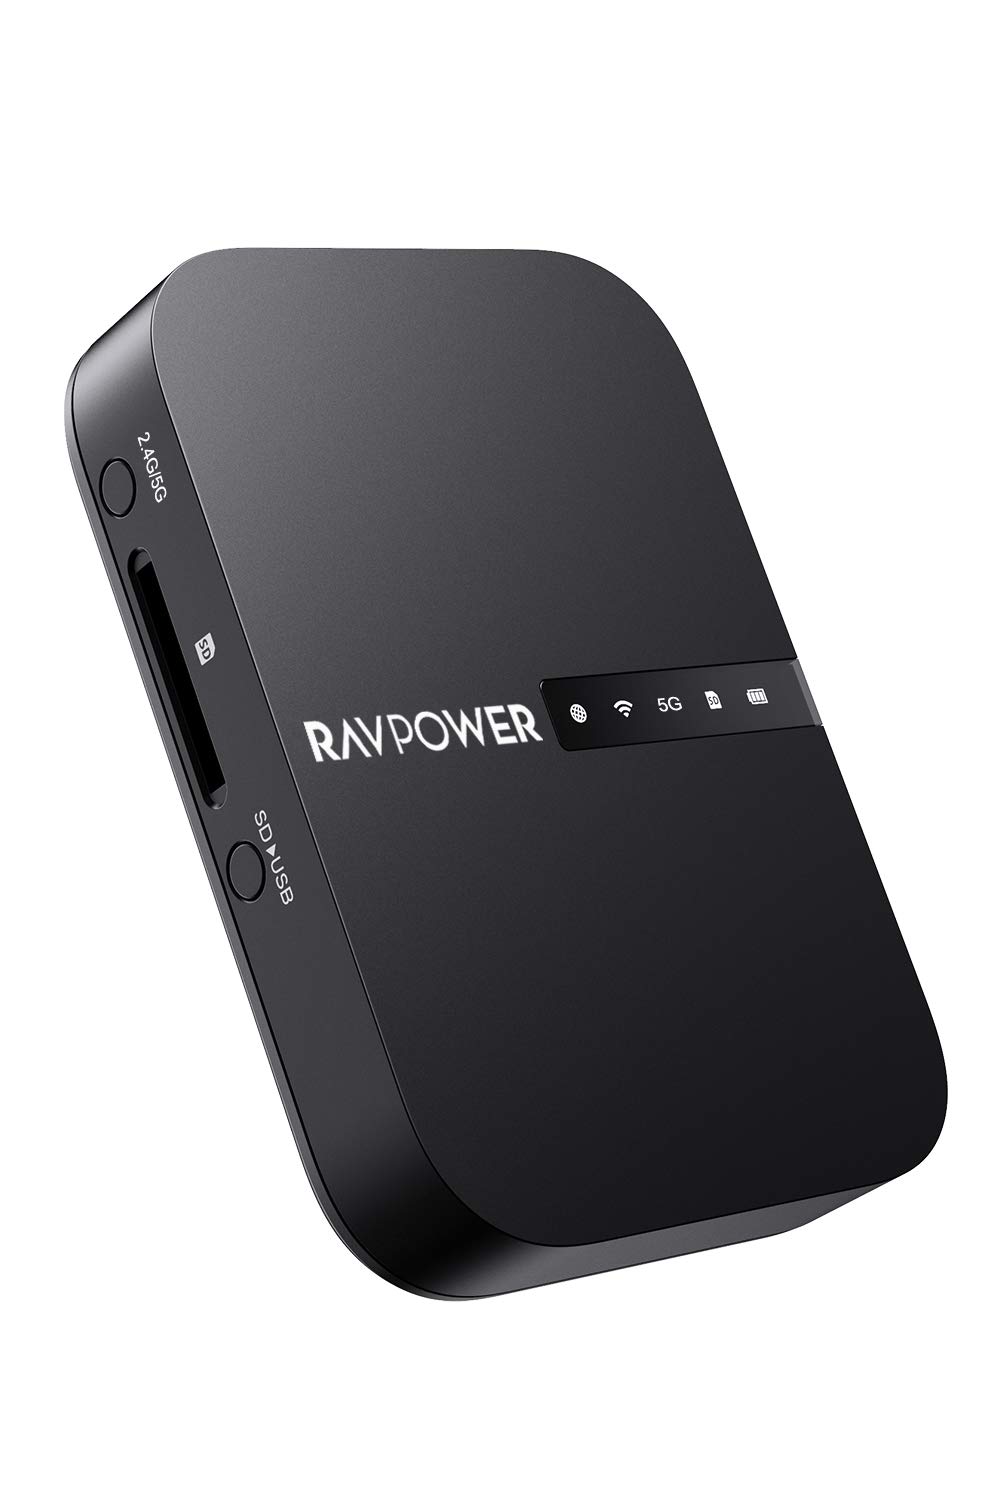 FileHub RP-WD009 | RAVPower Japan RAVPower 多機能型ワイヤレス 